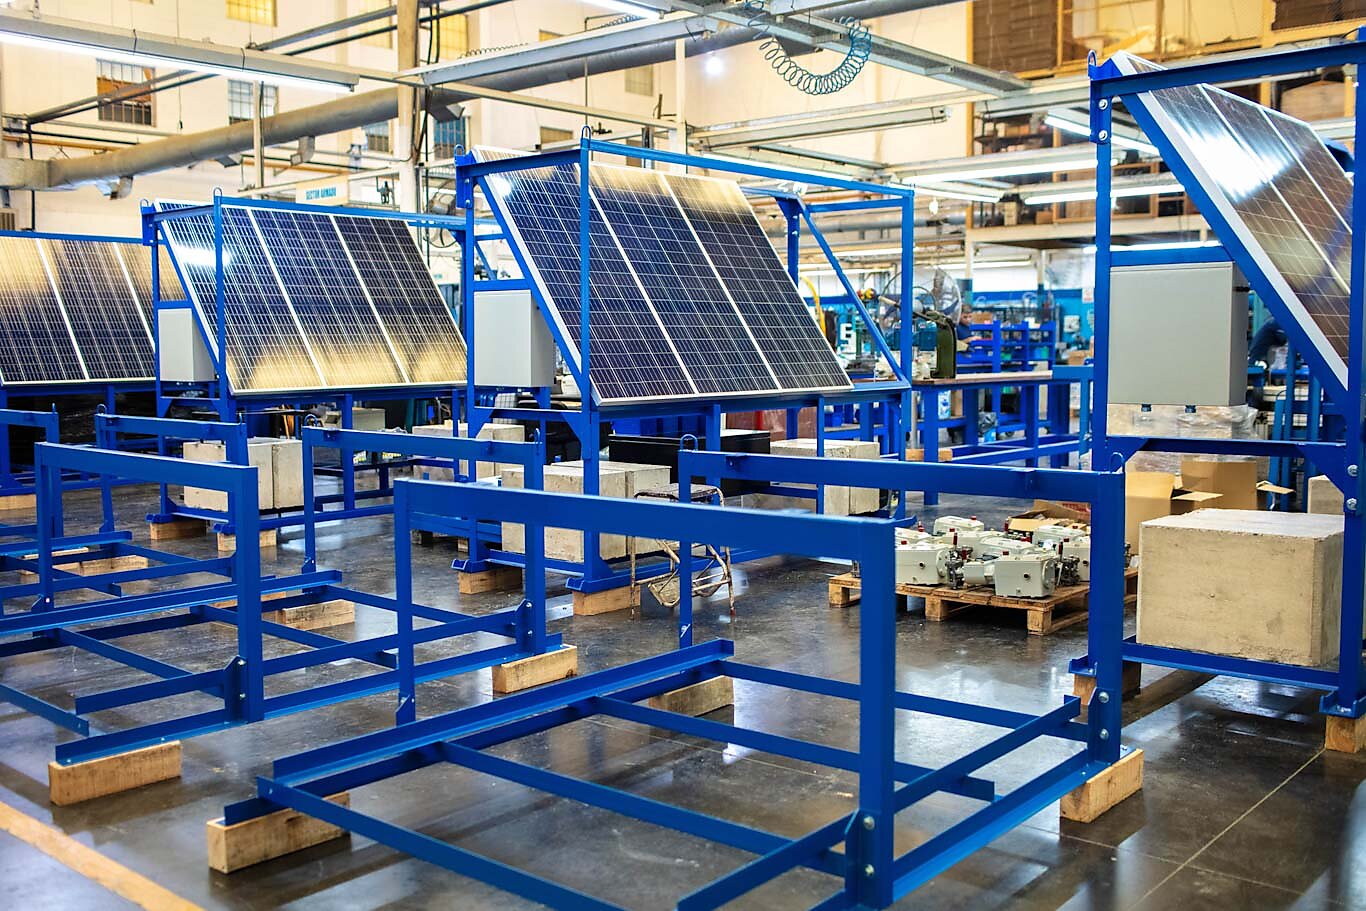 Solar panels in warehouse